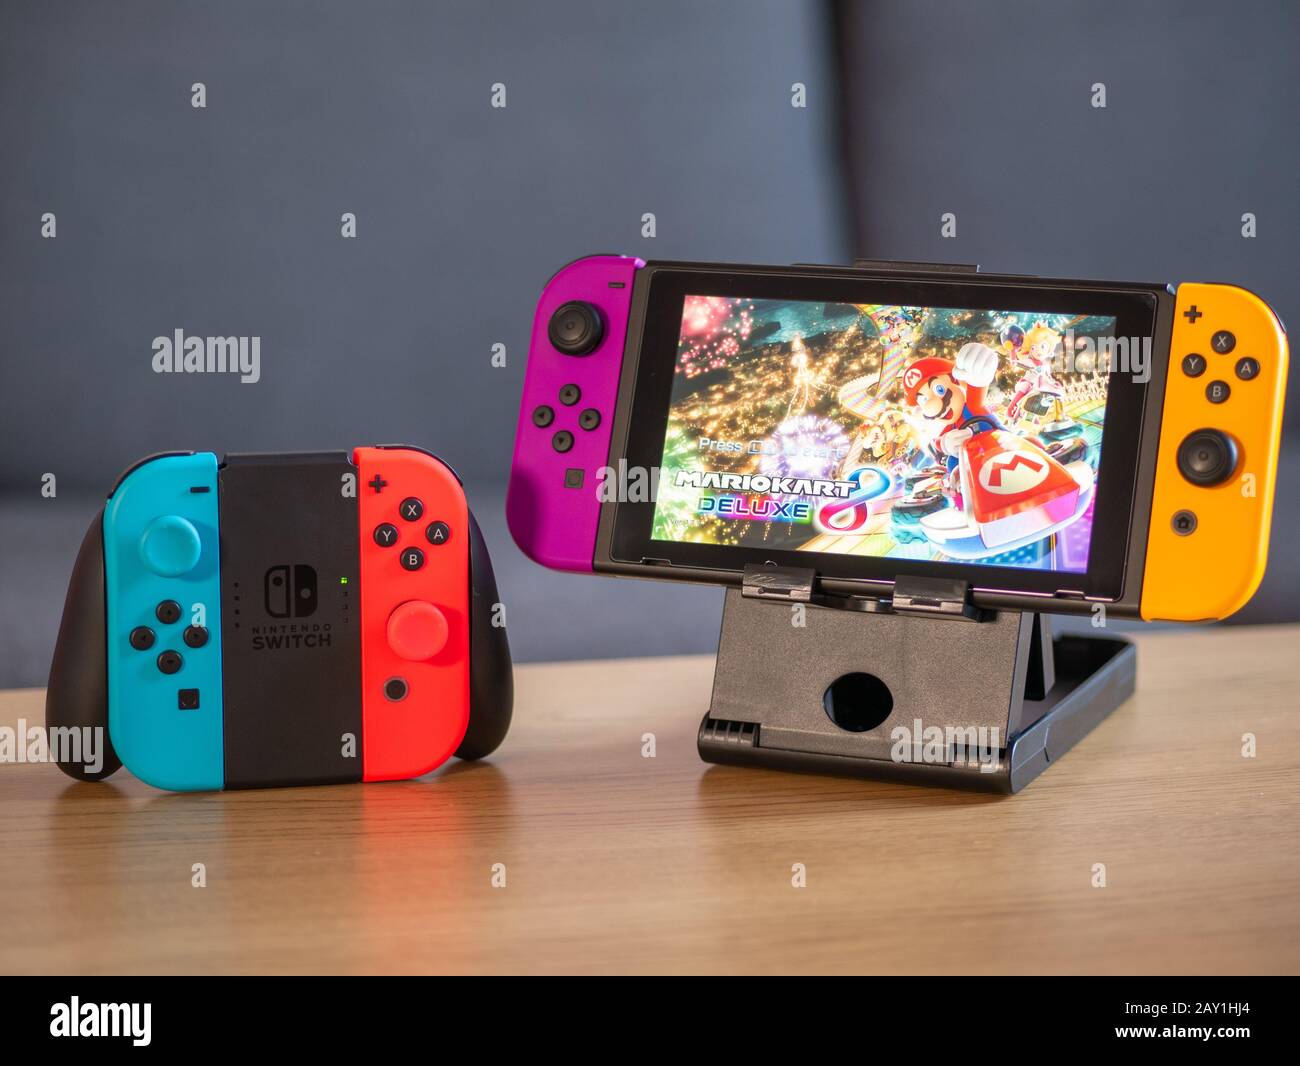 UK - Feb 2020: Nintendo switch with Mario Kart on screen in home setting  Stock Photo - Alamy